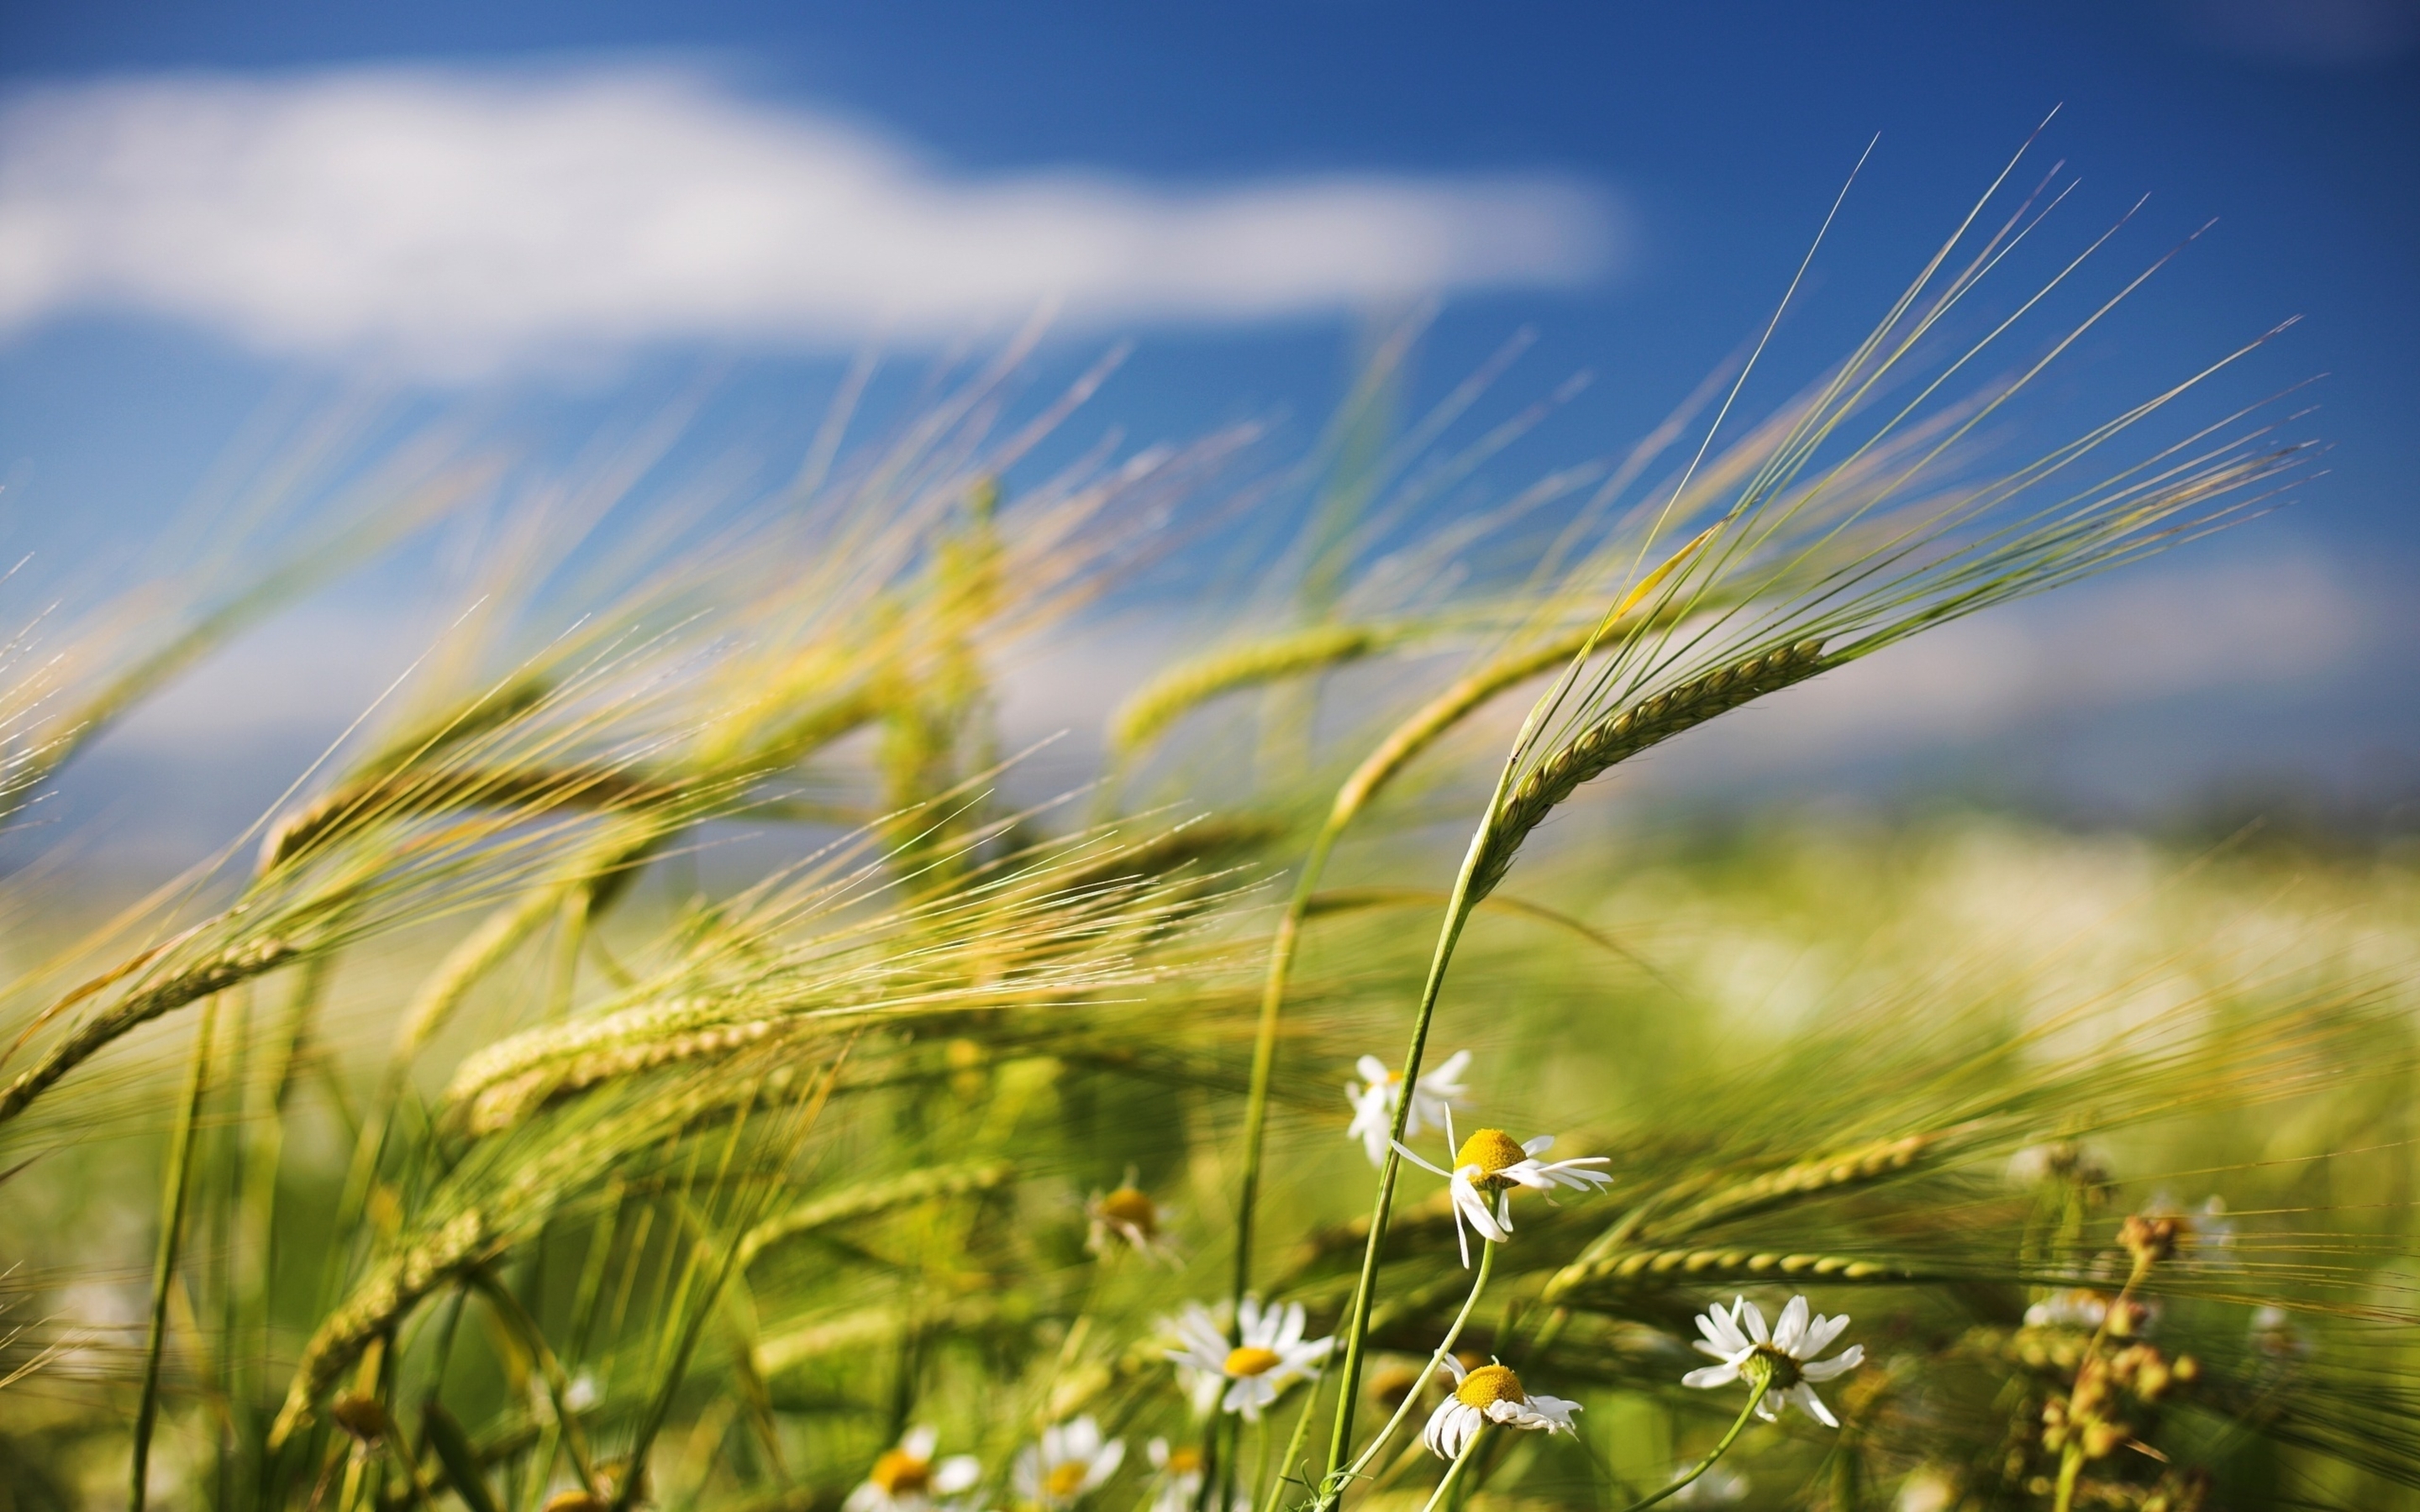 Image: Cereals, wheat, spike, Daisy, field, wind, macro, blurring